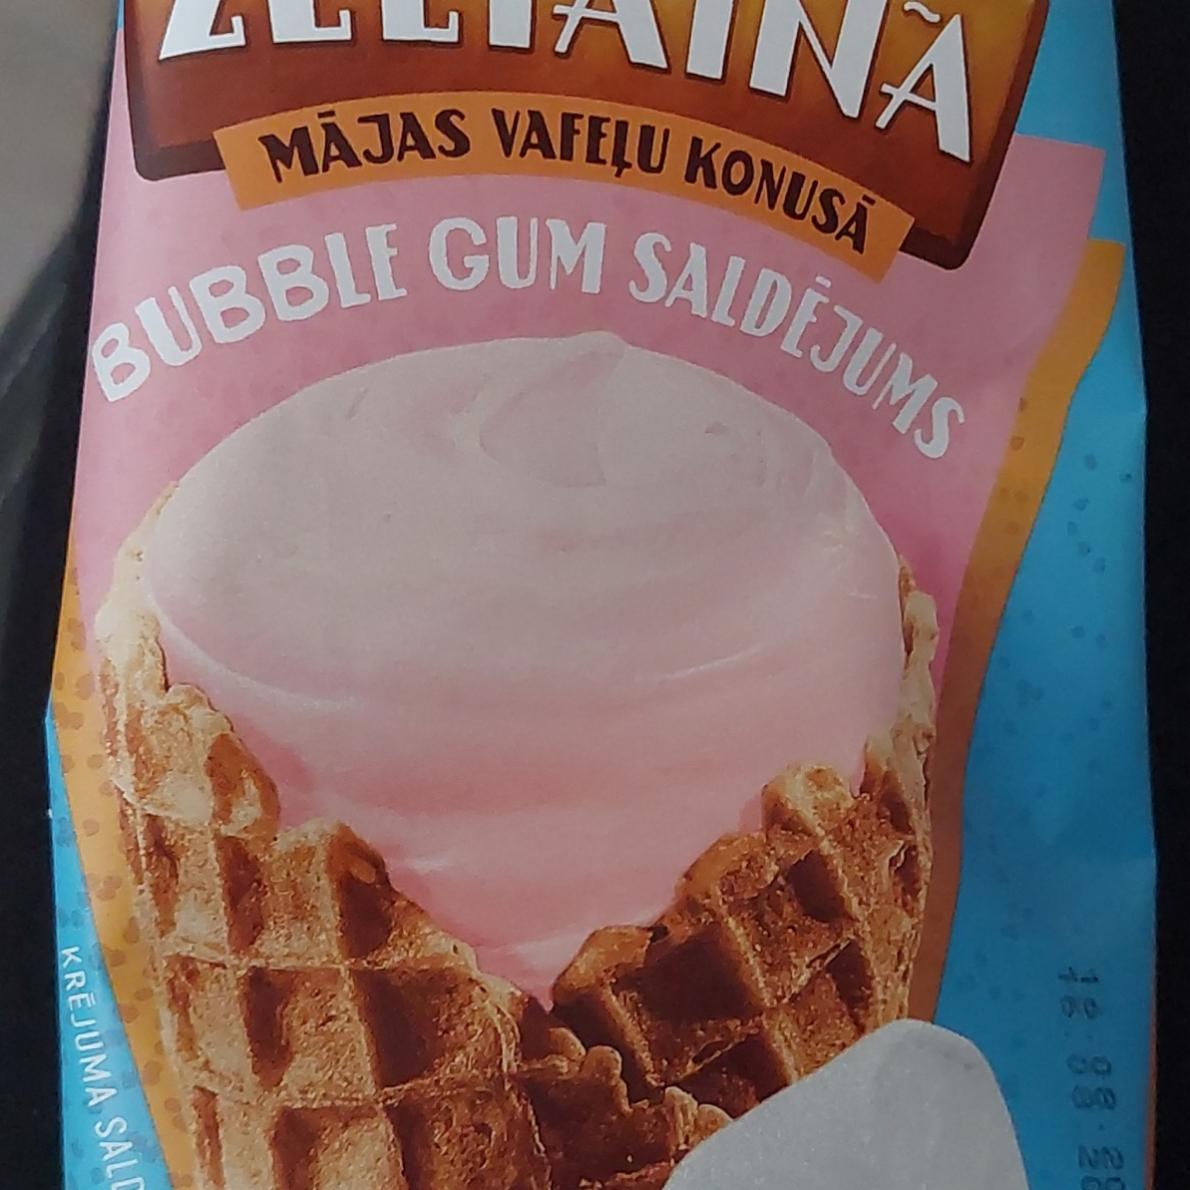 Фото - мороженое со вкусом жвачки с маршмеллоу в сахарном рожке Pols